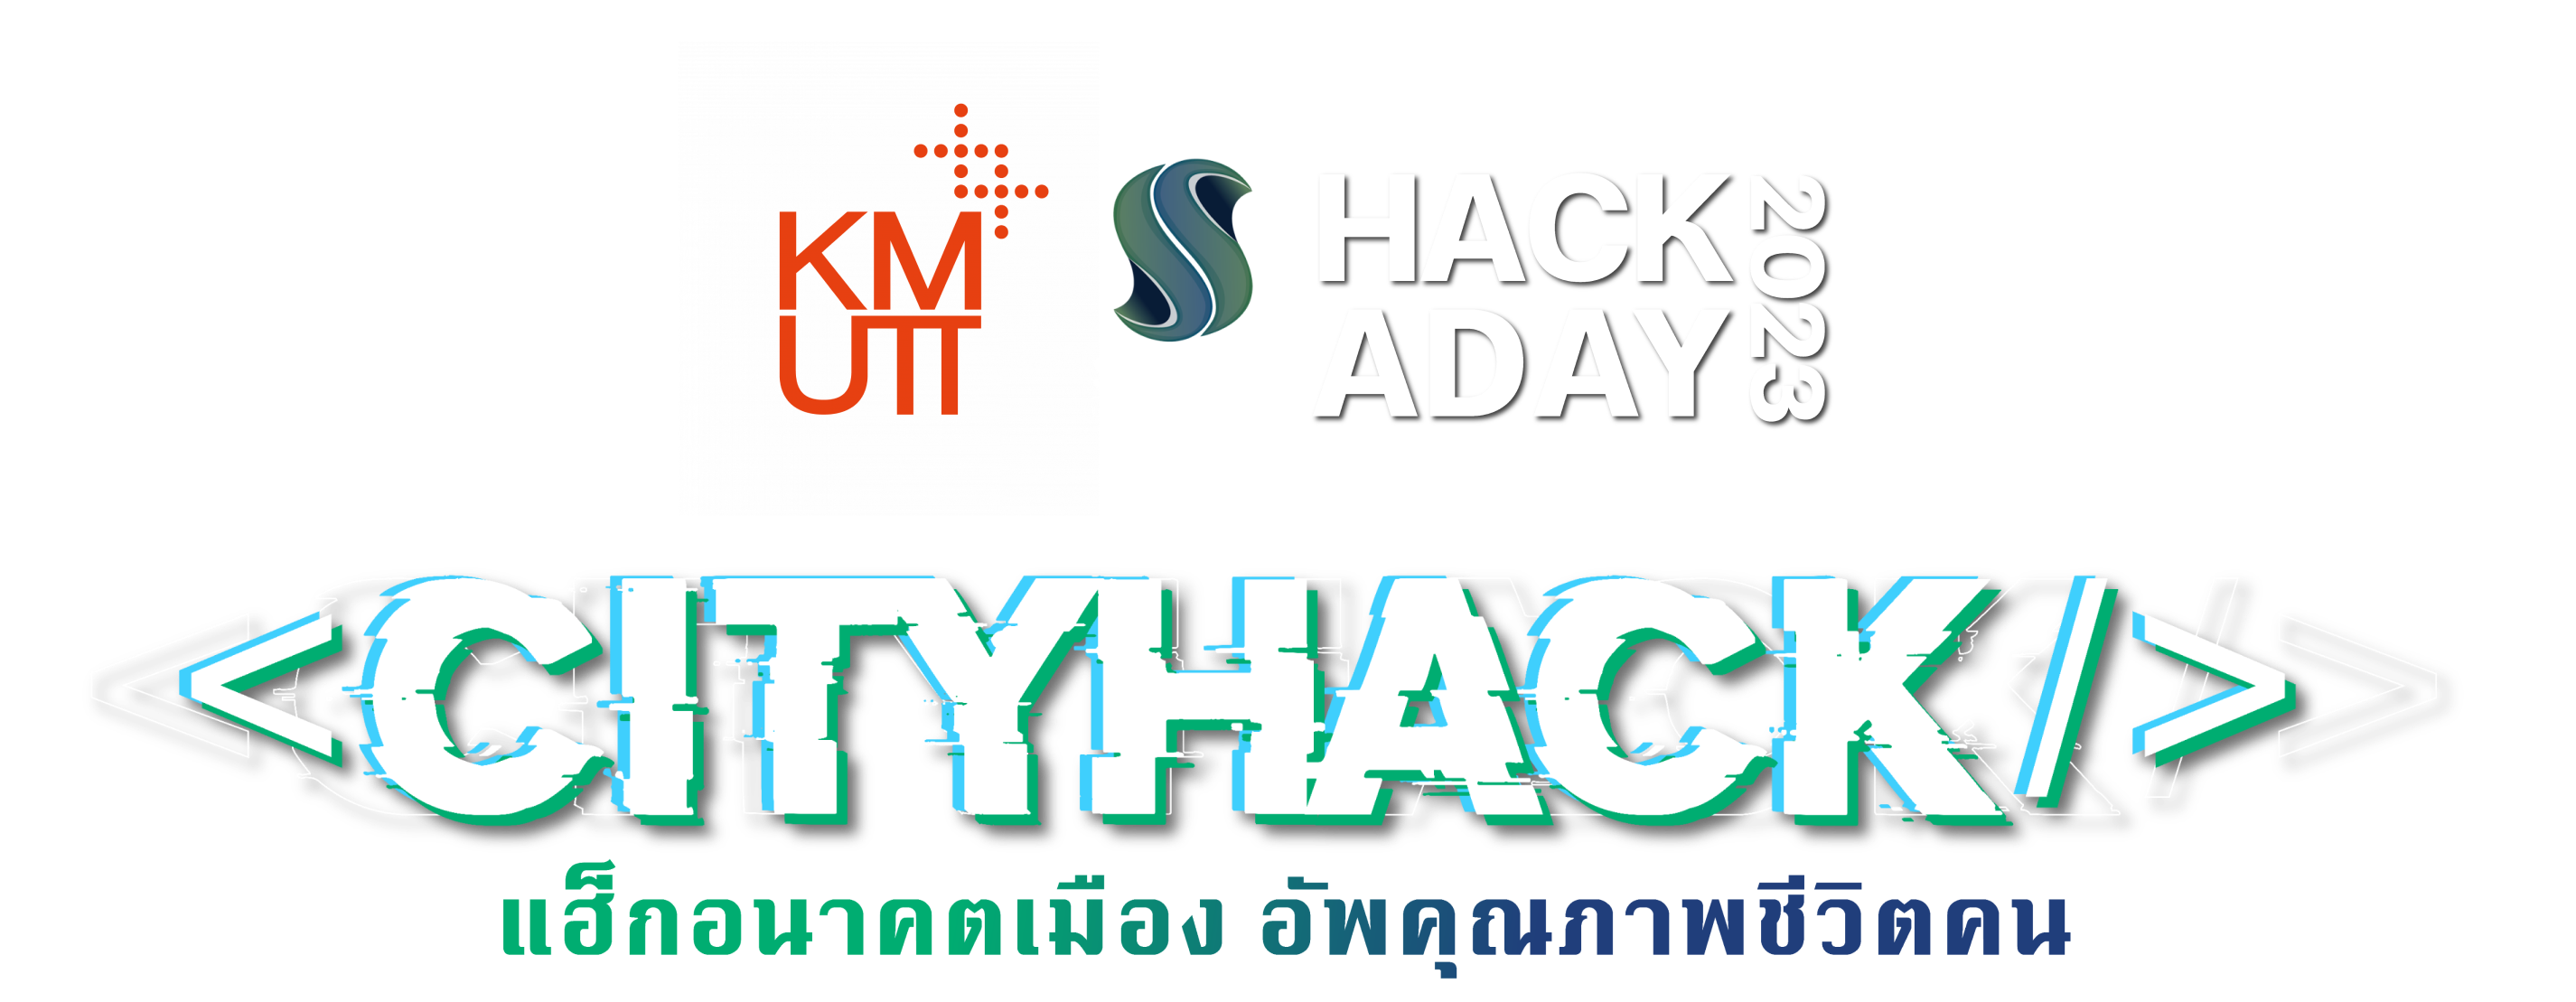 cityhack-logo.png